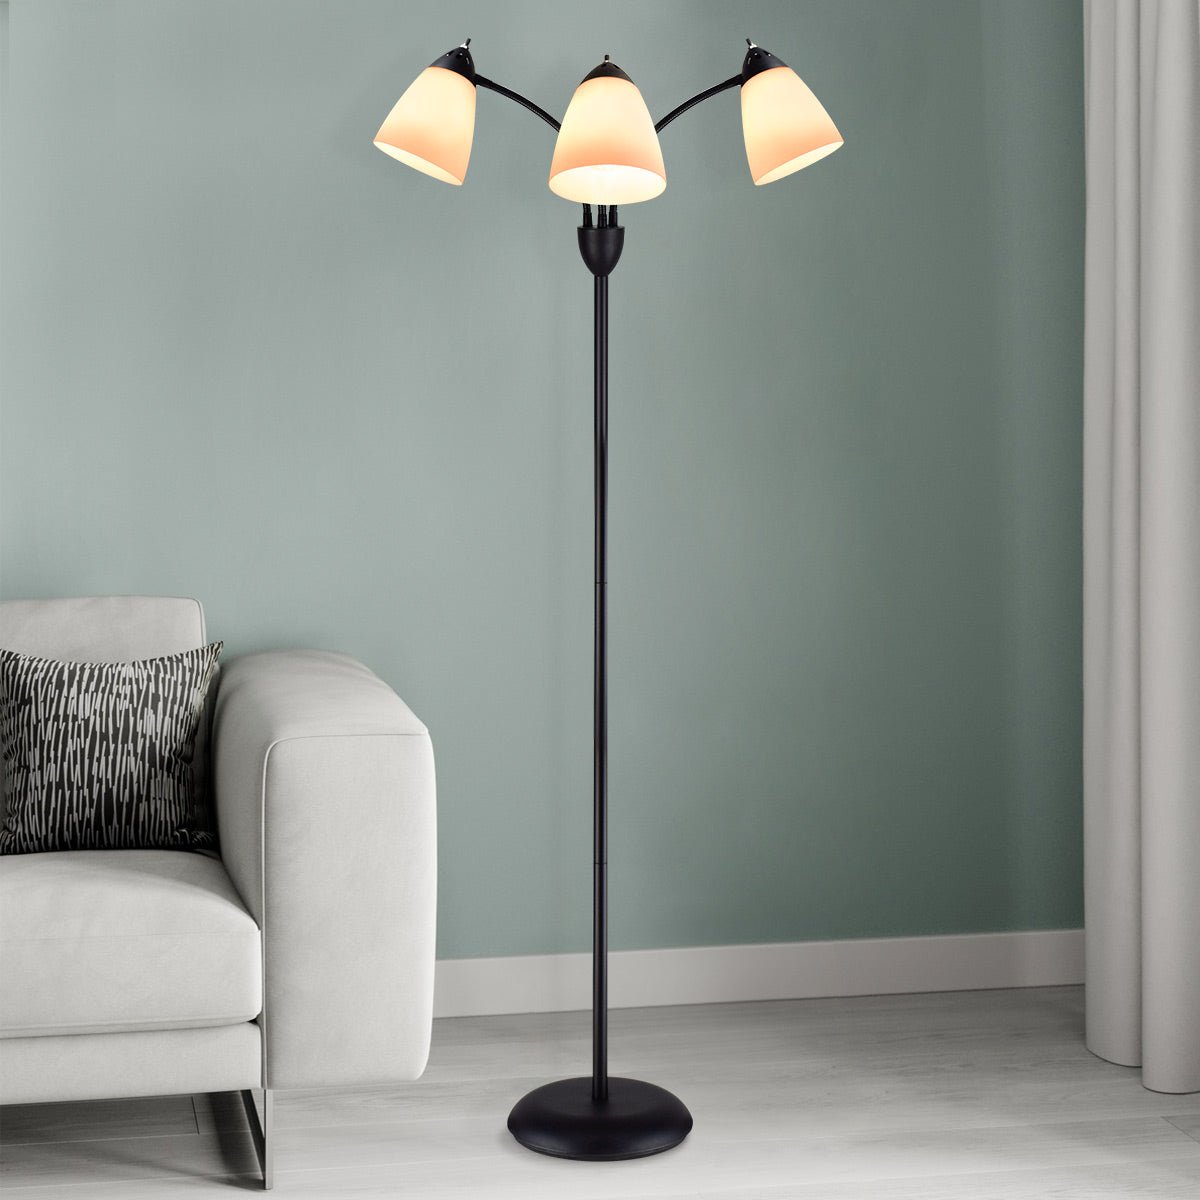 Depuley Modern Reading Floor Lamp, 3-Light with Adjustable Flexible Gooseneck Tree Standing Lamp for Living Room, Bedroom, Study Room, Office -Black Metal White Shades - WSFLL003 1 | Depuley